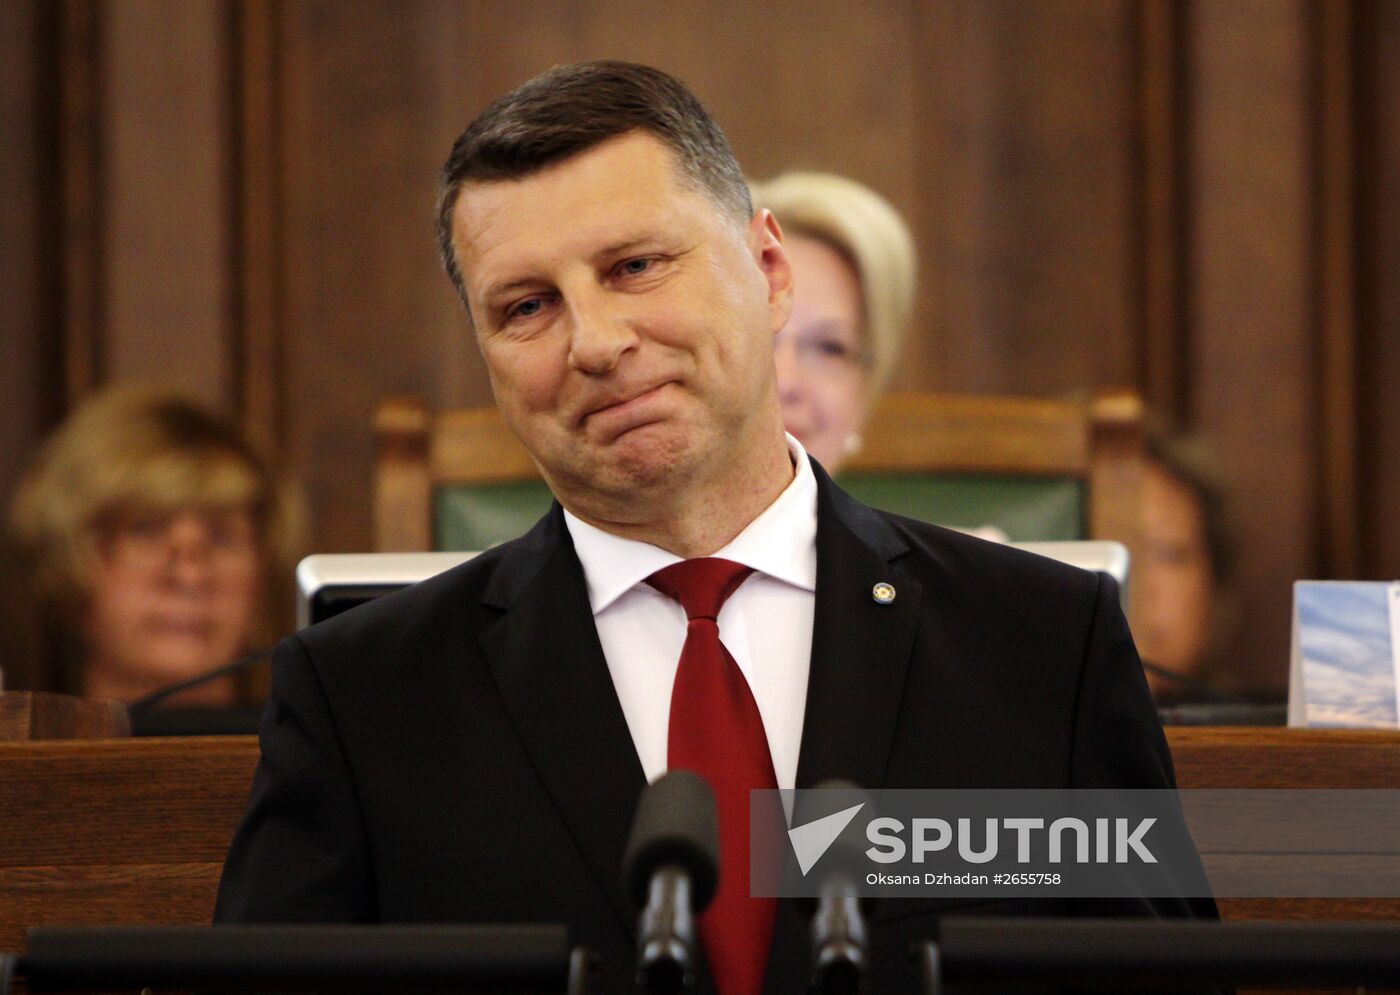 Inauguration of Latvia's new president